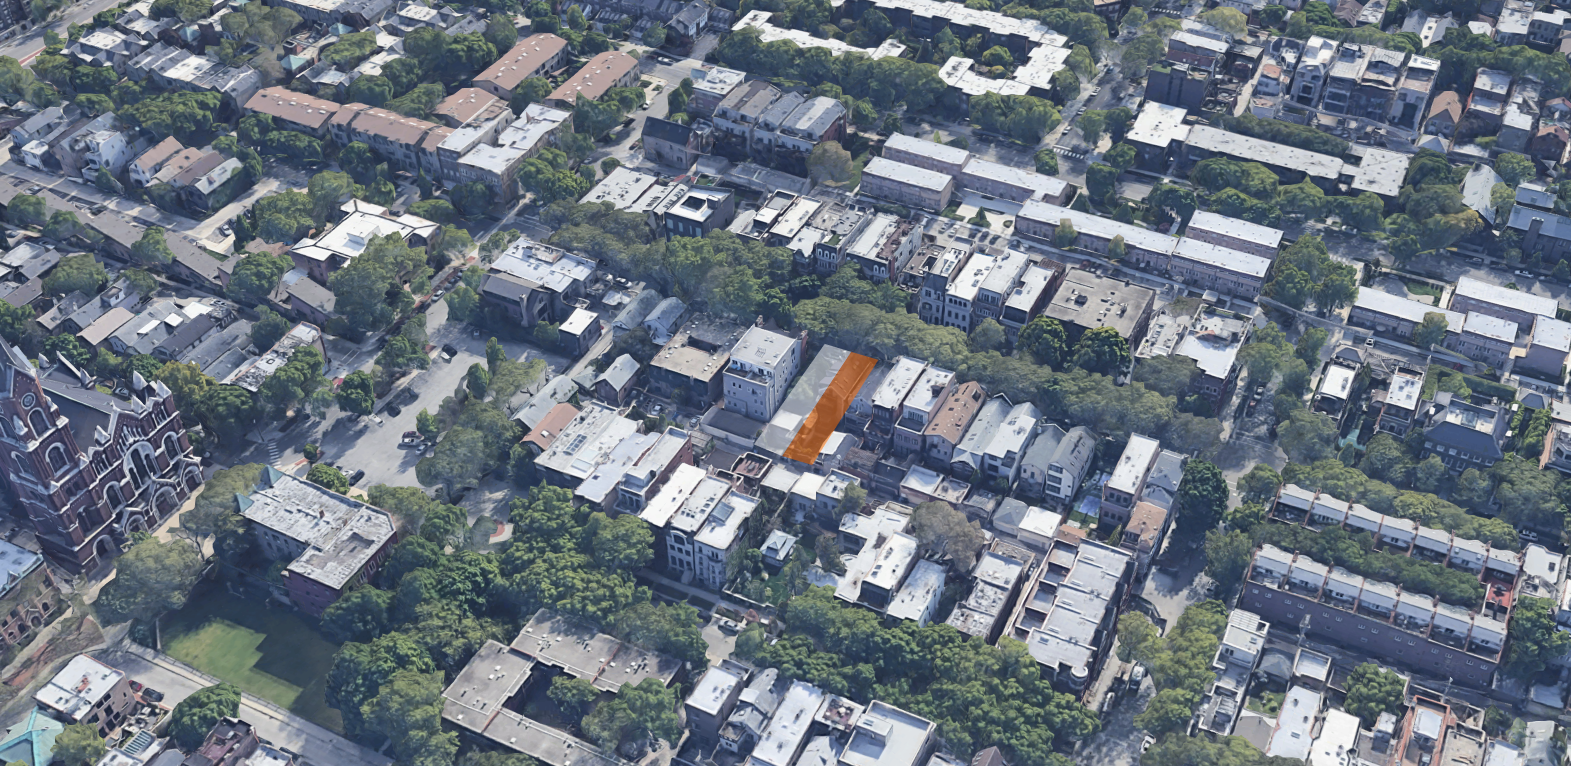 1733 N Mohawk Avenue (orange) and adjacent development-ready lot (white)